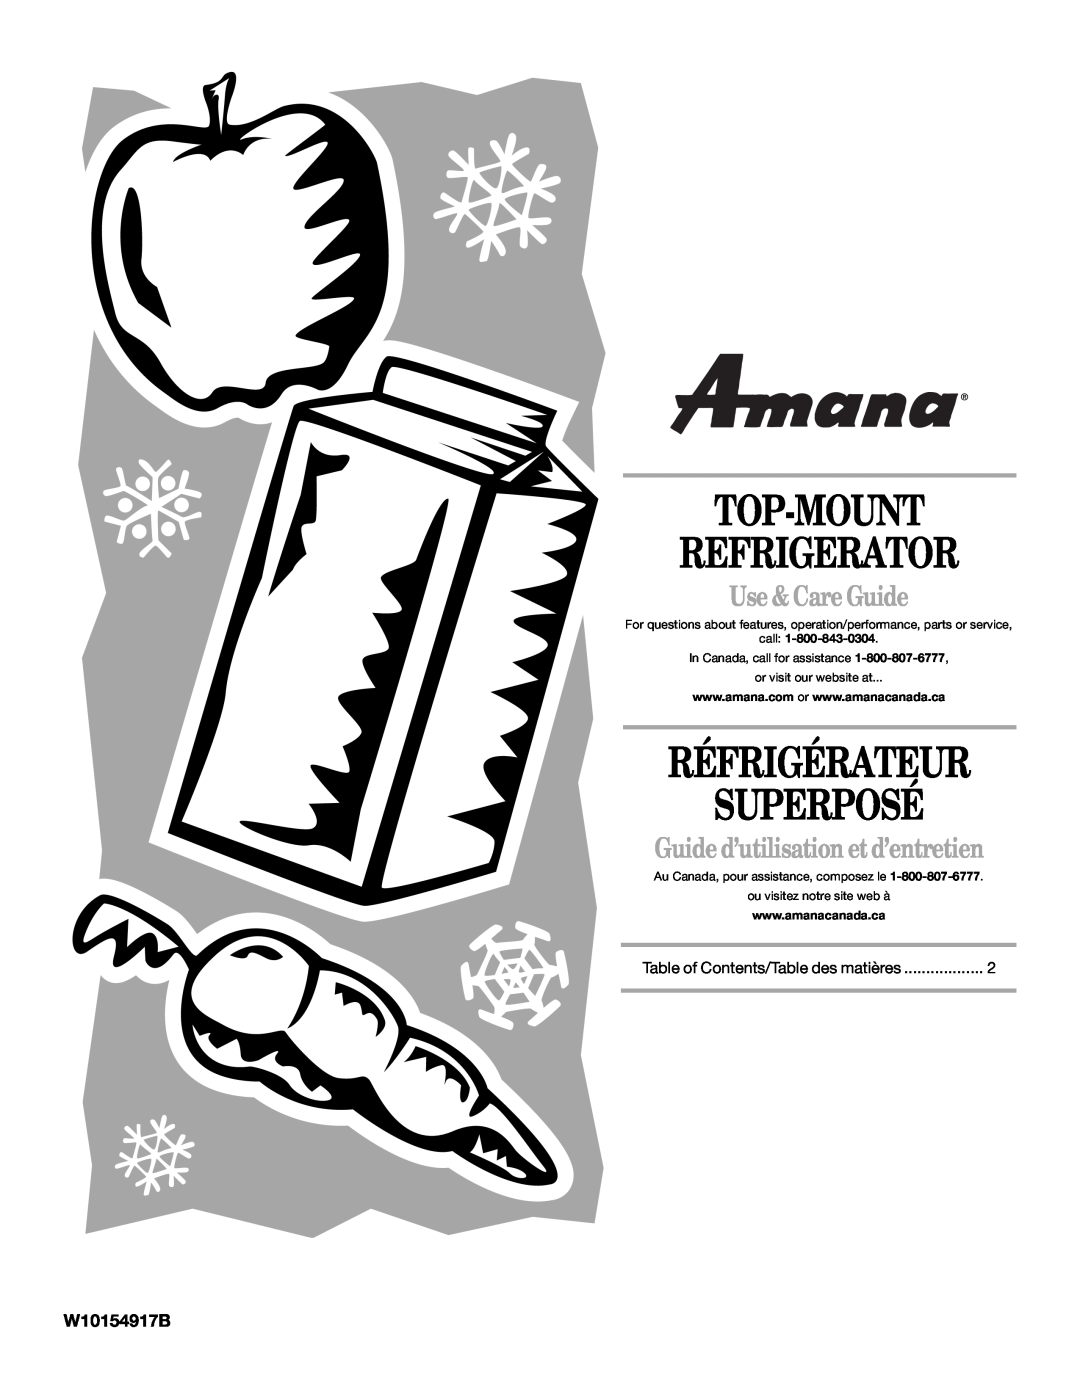 Amana W10162526A manual W10154917B, Top-Mount Refrigerator, Réfrigérateur Superposé, Use & Care Guide, call 